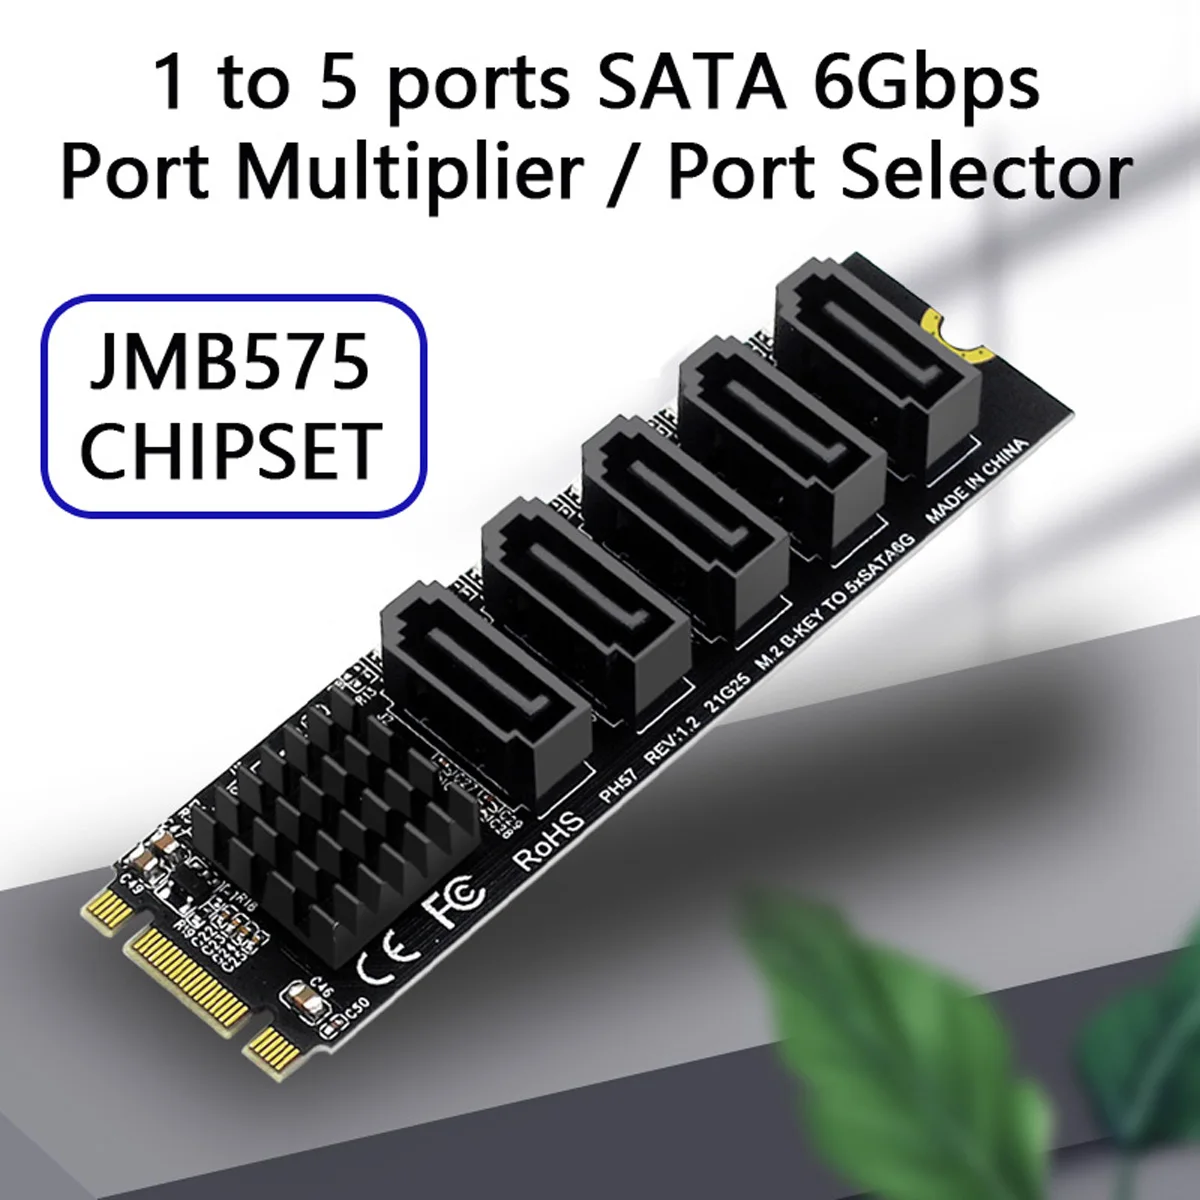 

CYSM Xiwai 2280 M.2 NGFF Key B+M SATA to SATA 3.0 6Gbps 5 Ports Adapter Converter Port Multiplier Selector JMB575